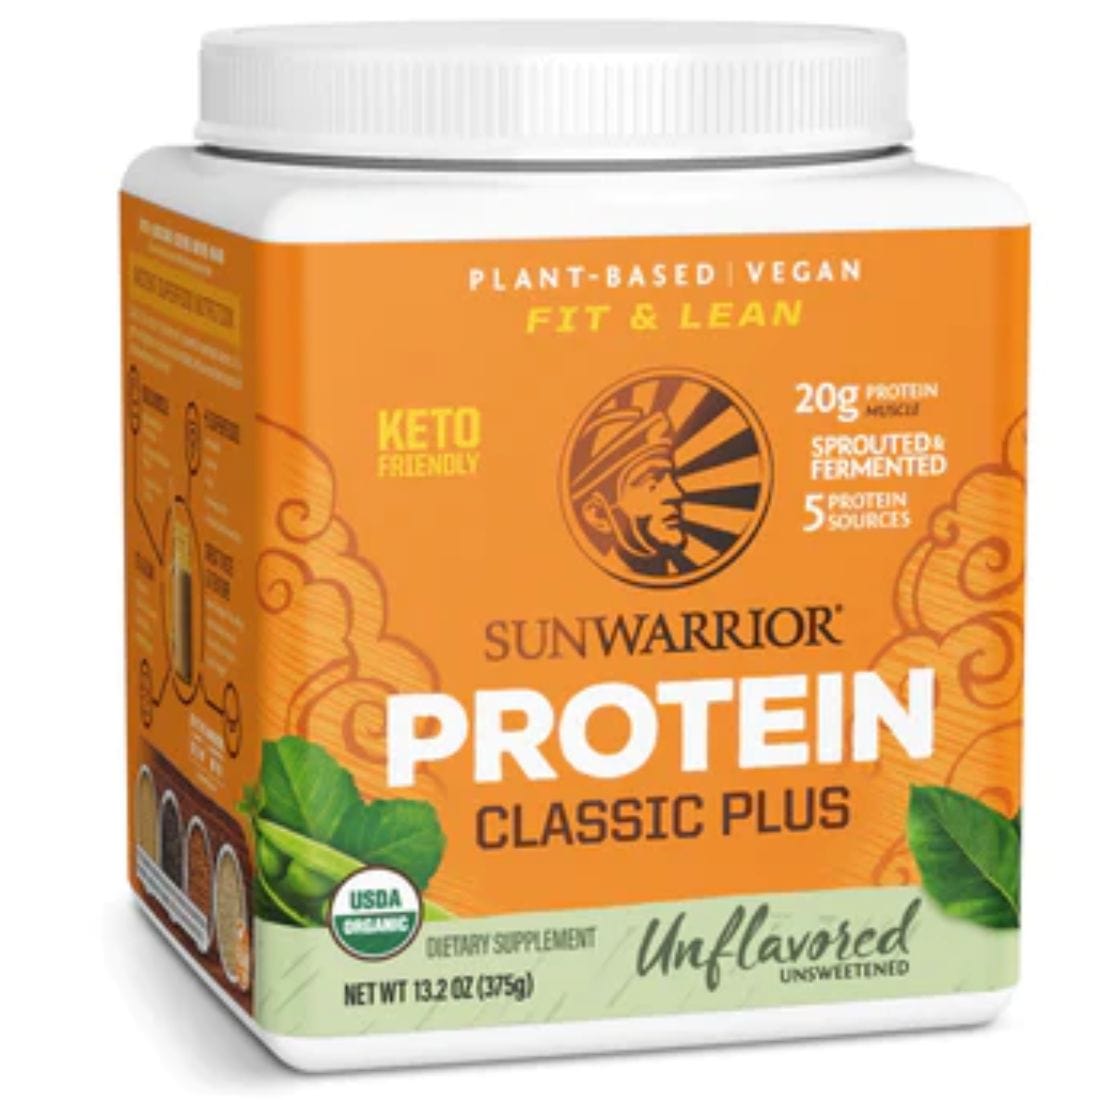 Sun Warrior Protein Classic Plus Protein, Sprouted Brown Rice, Chia, Quinoa, Amaranth, Raw Vegan Fermented Protein